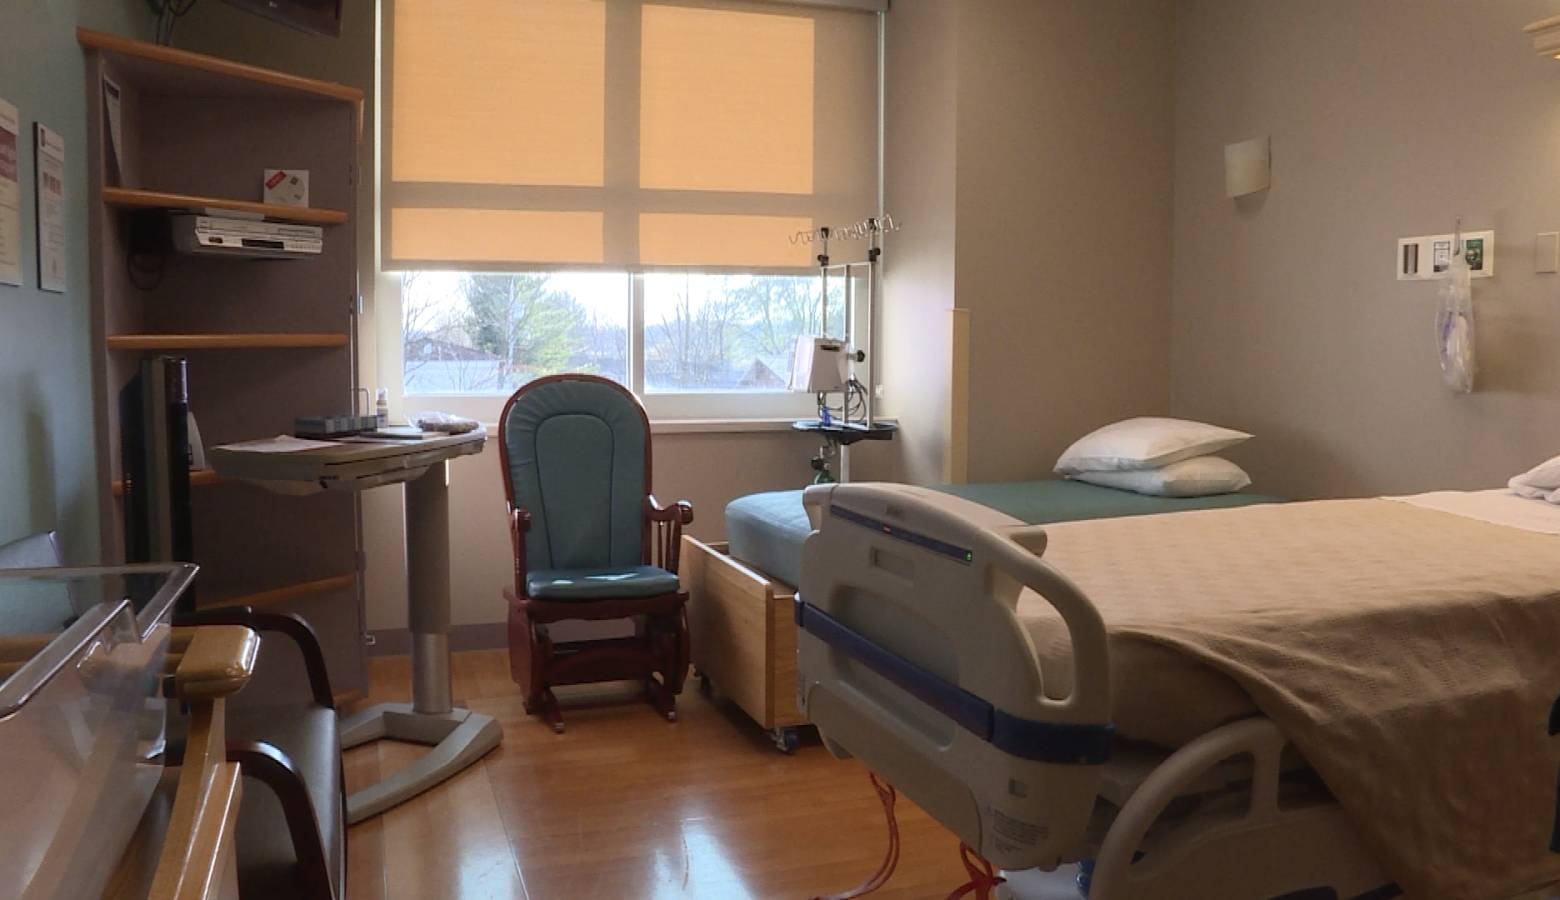 Hospital birthing room. (Becca Costello/WFIU)